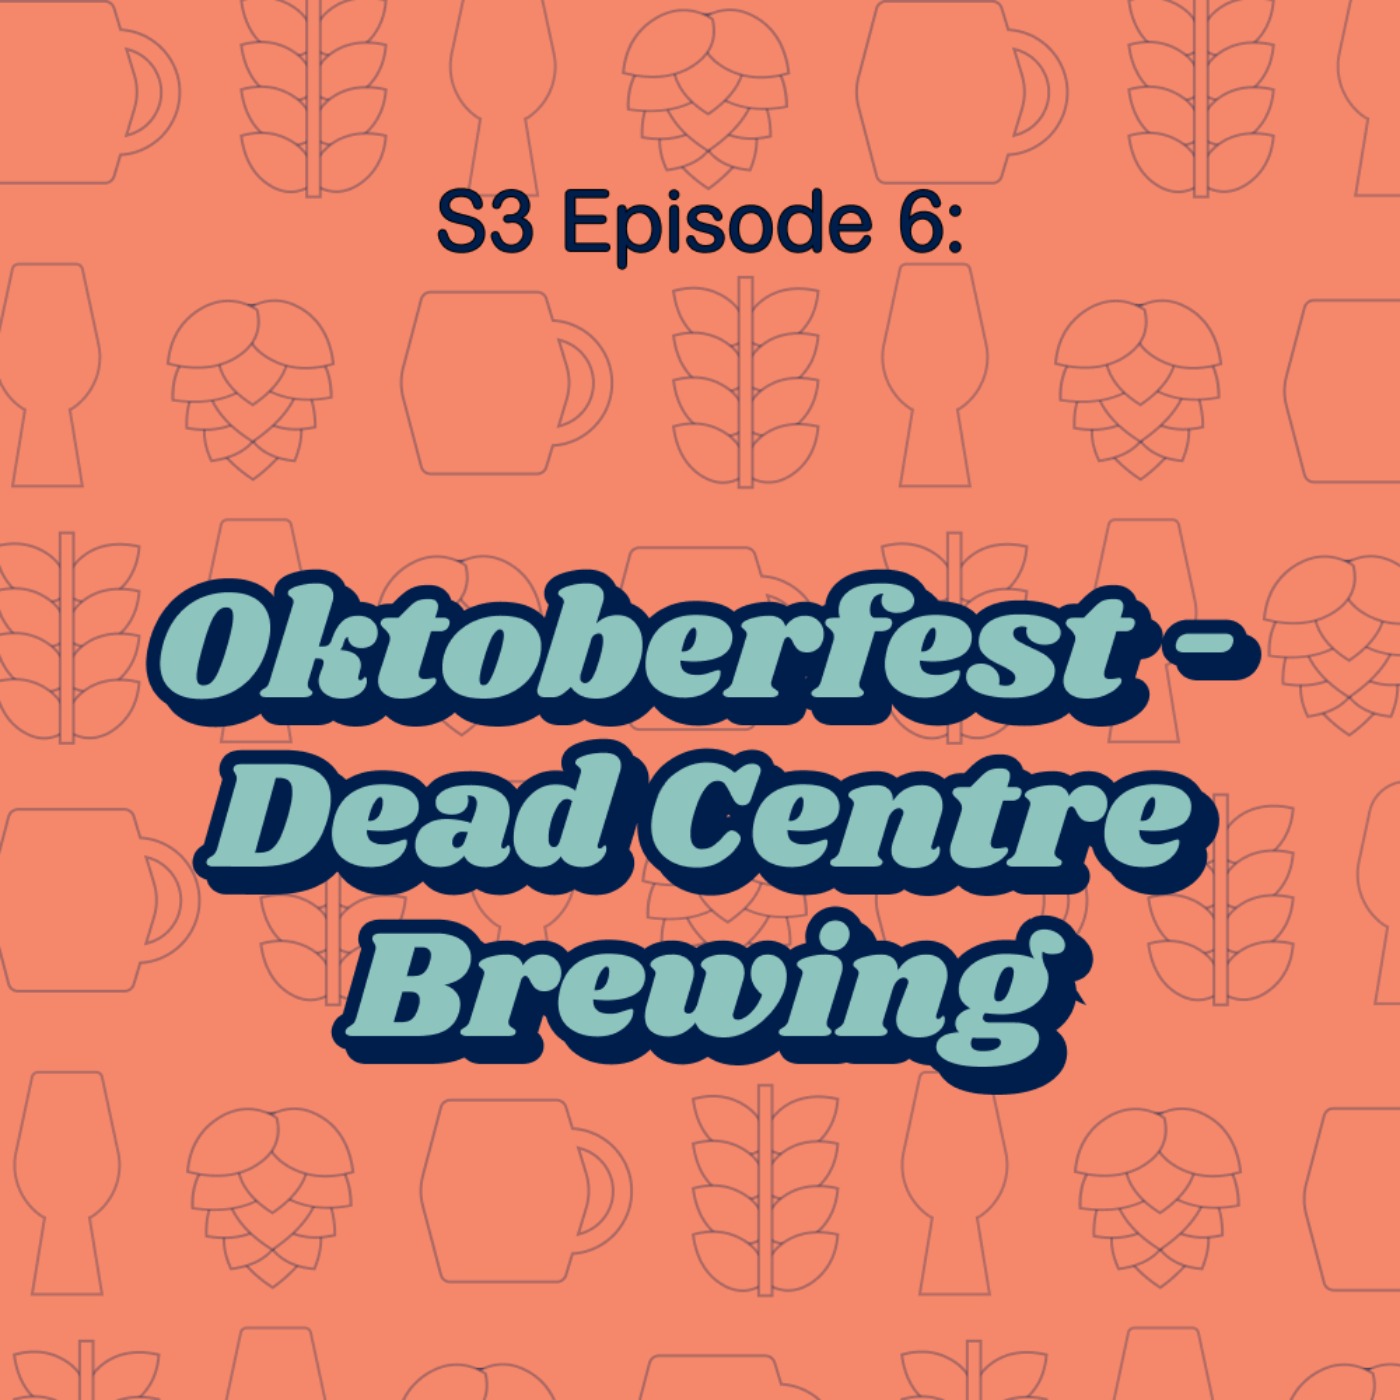 Oktoberfest with Dead Centre Brewing